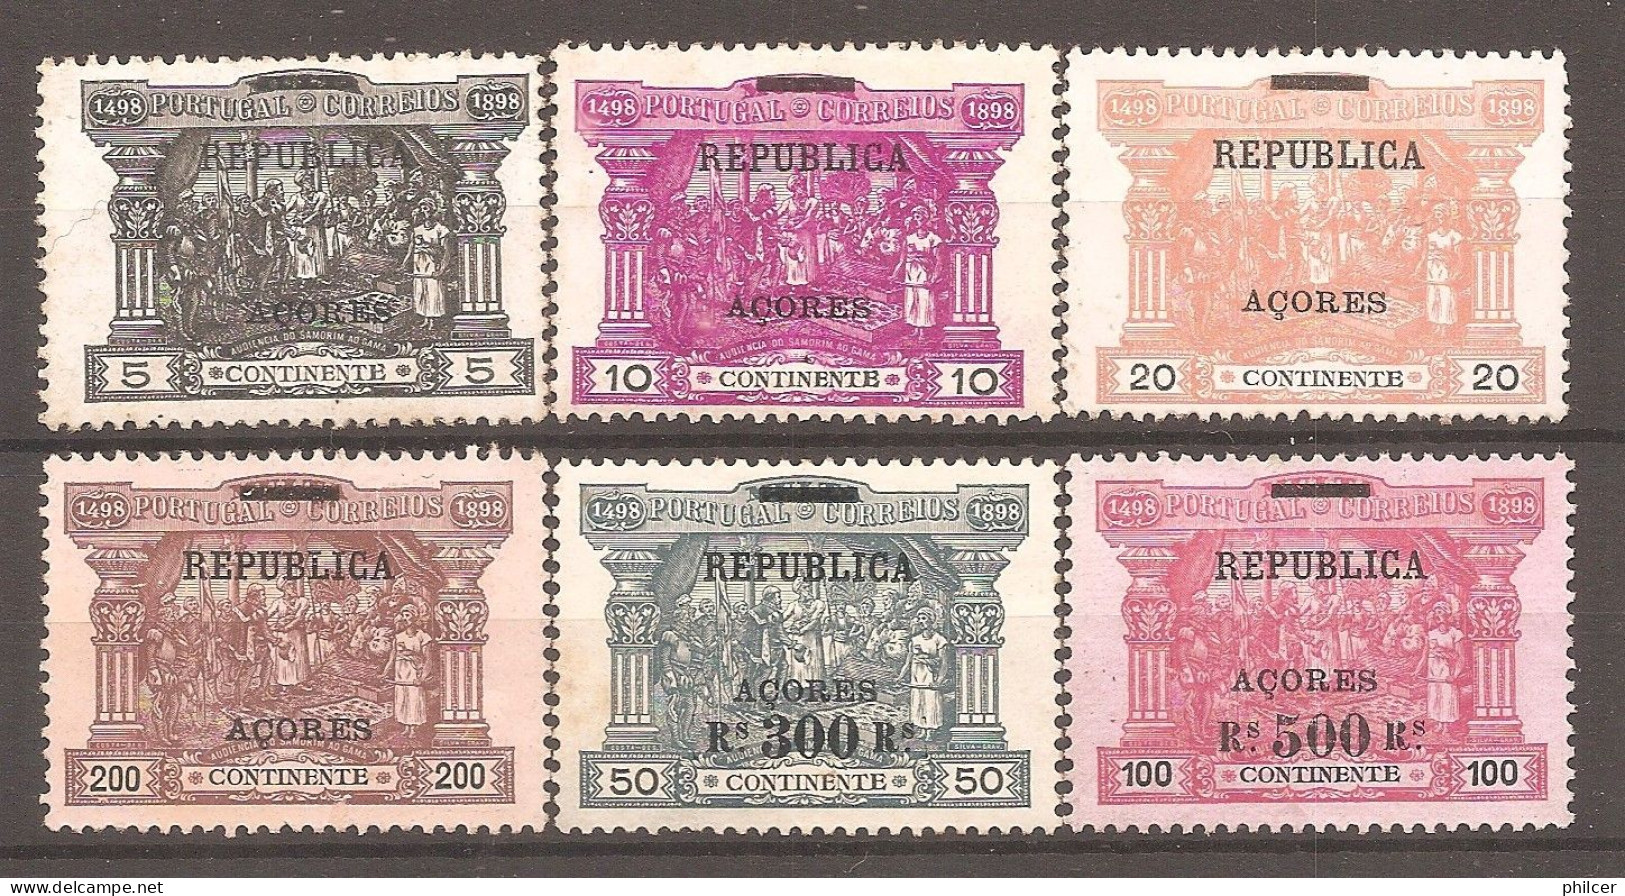 Açores, 1911/2, # 143/8, MNG - Azores